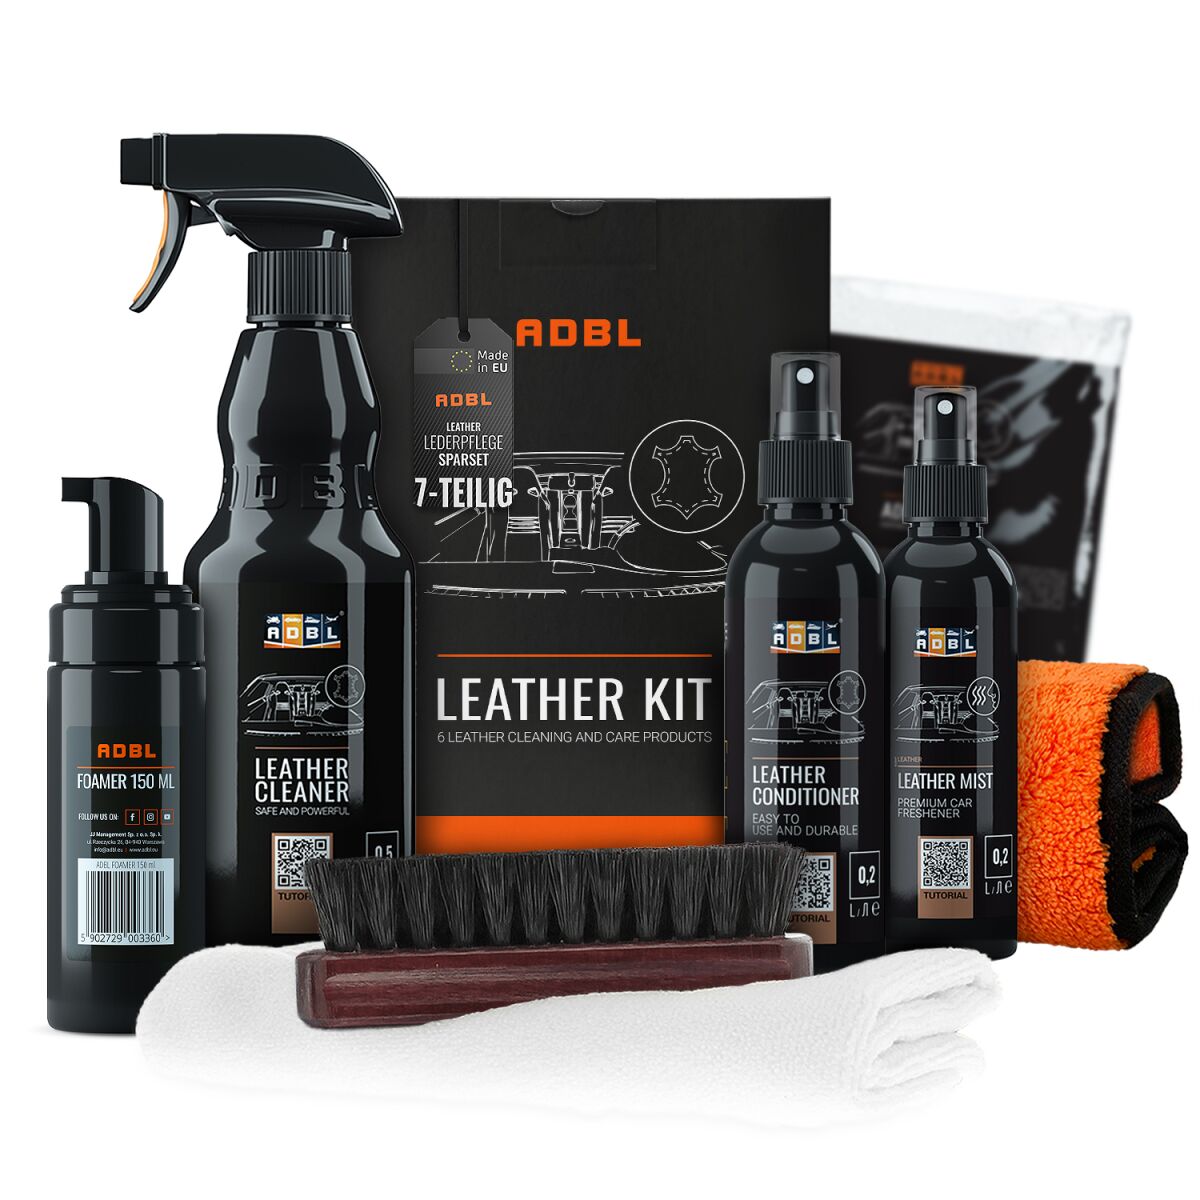 € 29,90 Lederpflegeset Leather Kit waschguru | Autopflege, ADBL